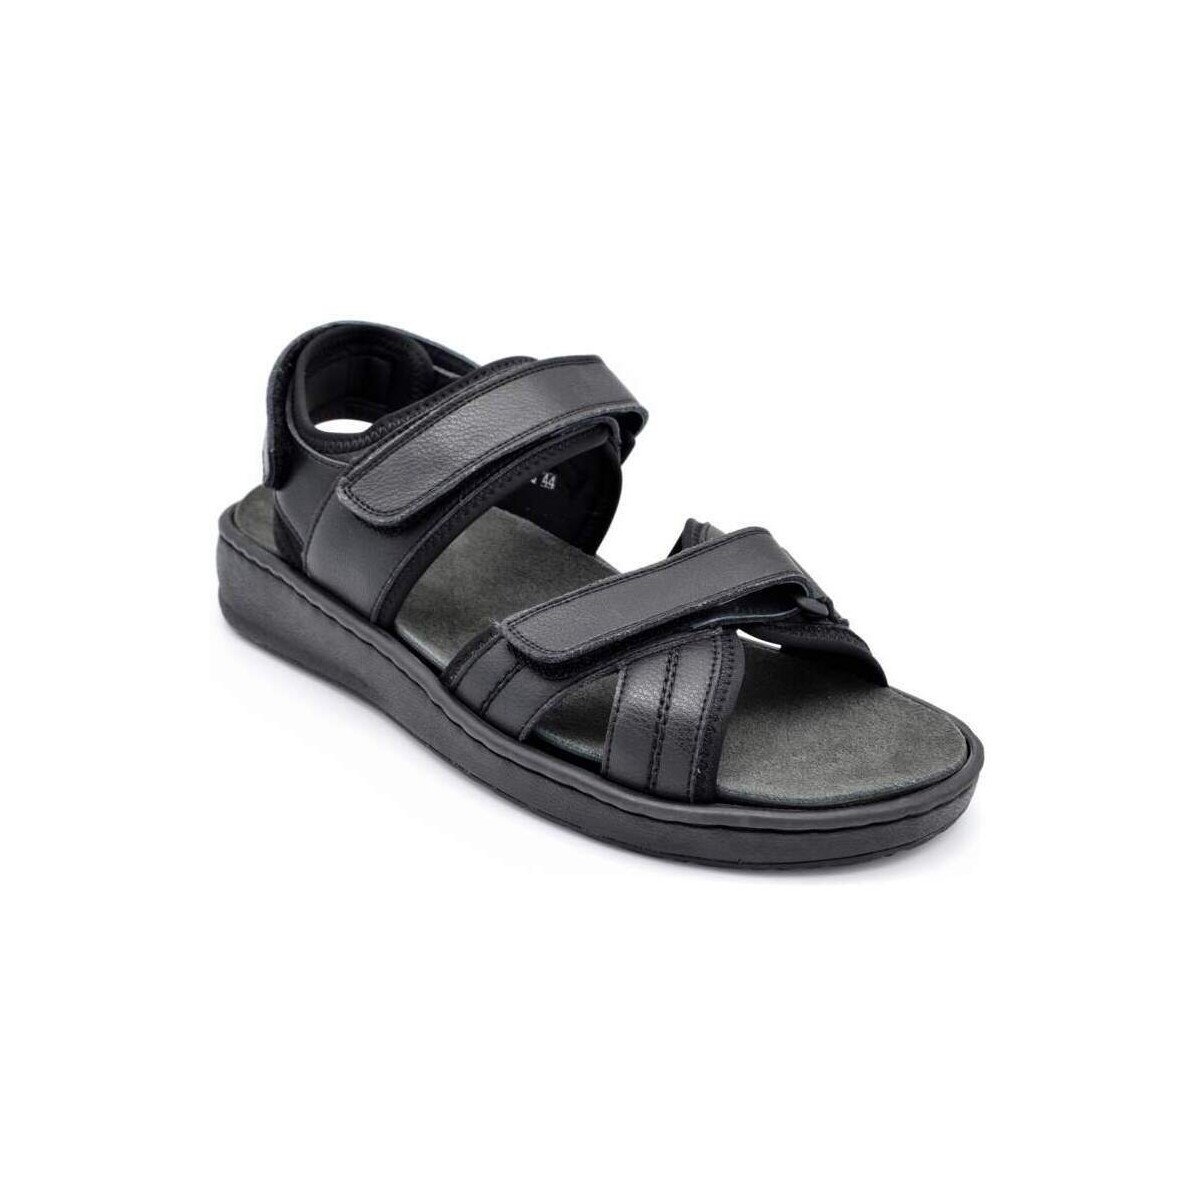 Zapatos Hombre Sandalias G Comfort 966 Negro